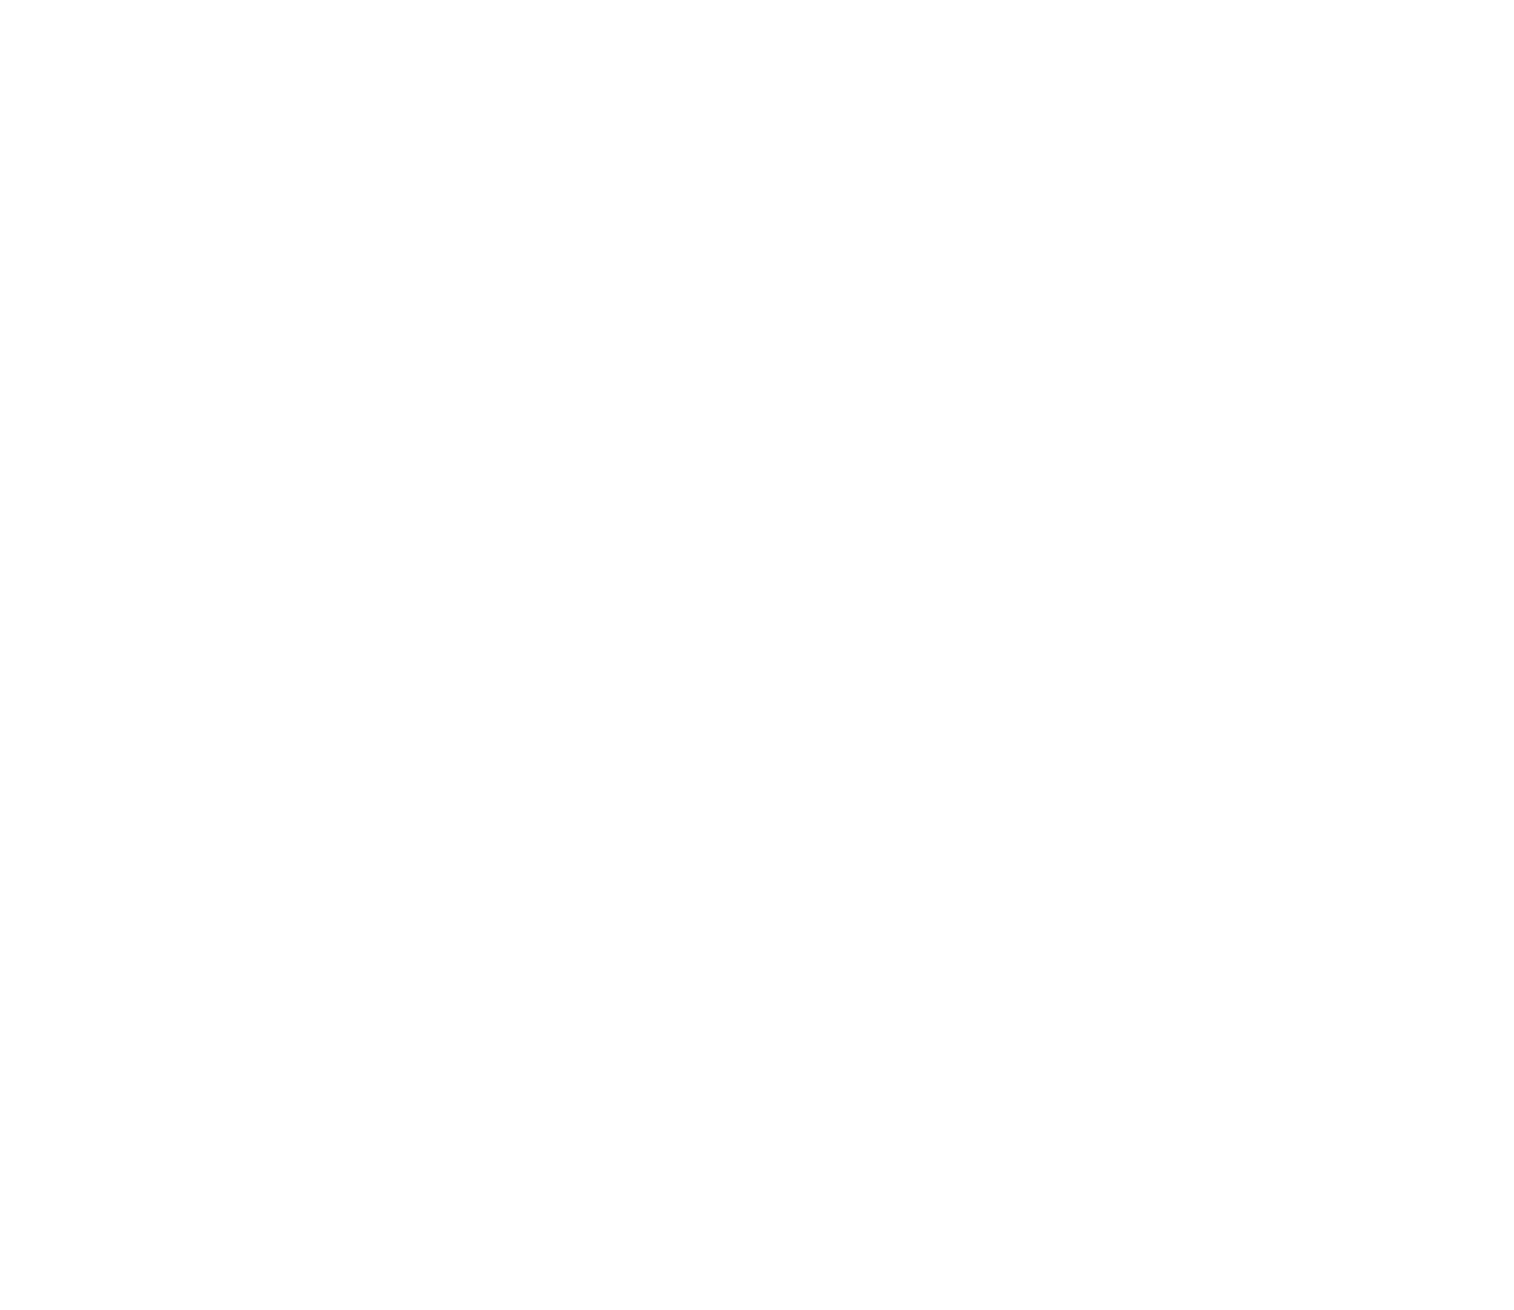 Mitsubishi Motors logo pour fonds sombres (PNG transparent)